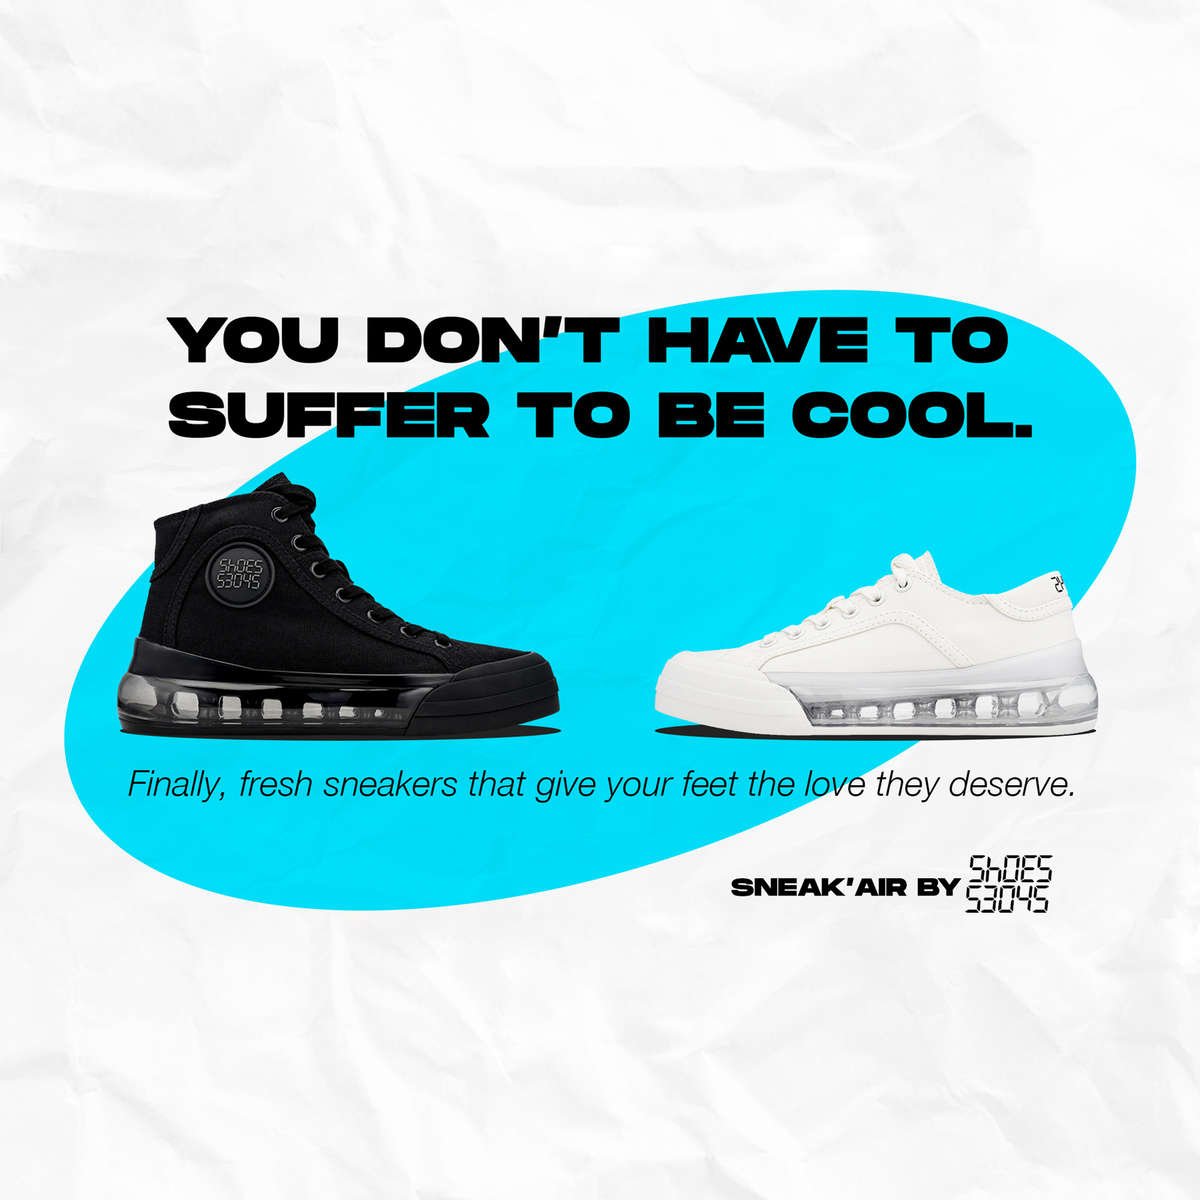 Shoes 53045 Sneak'Air Campaign